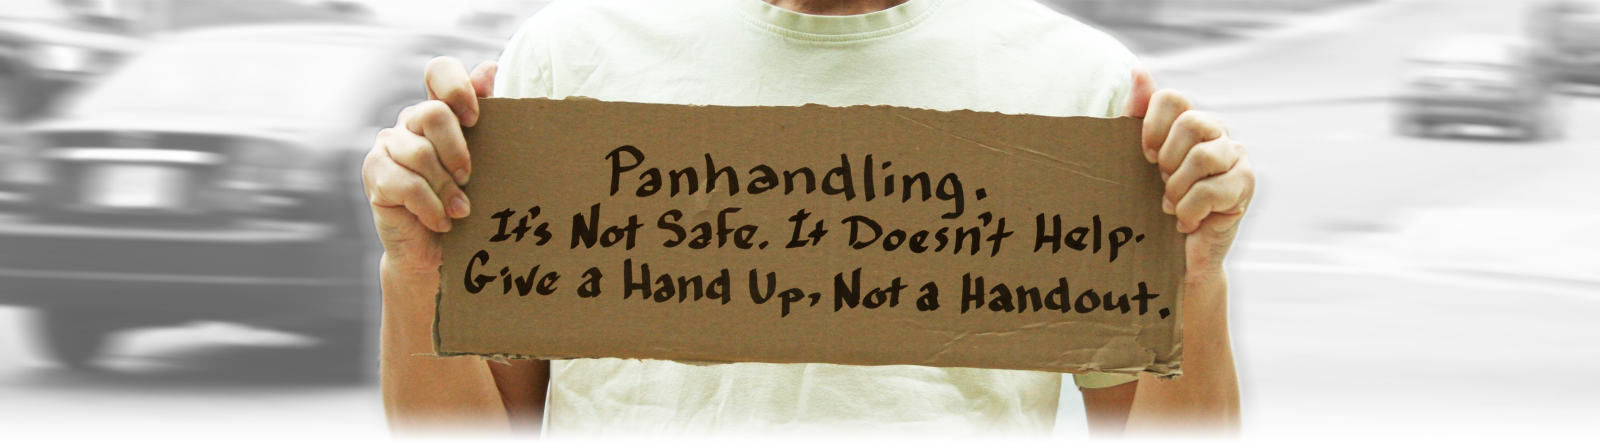 panhandler holding a sign